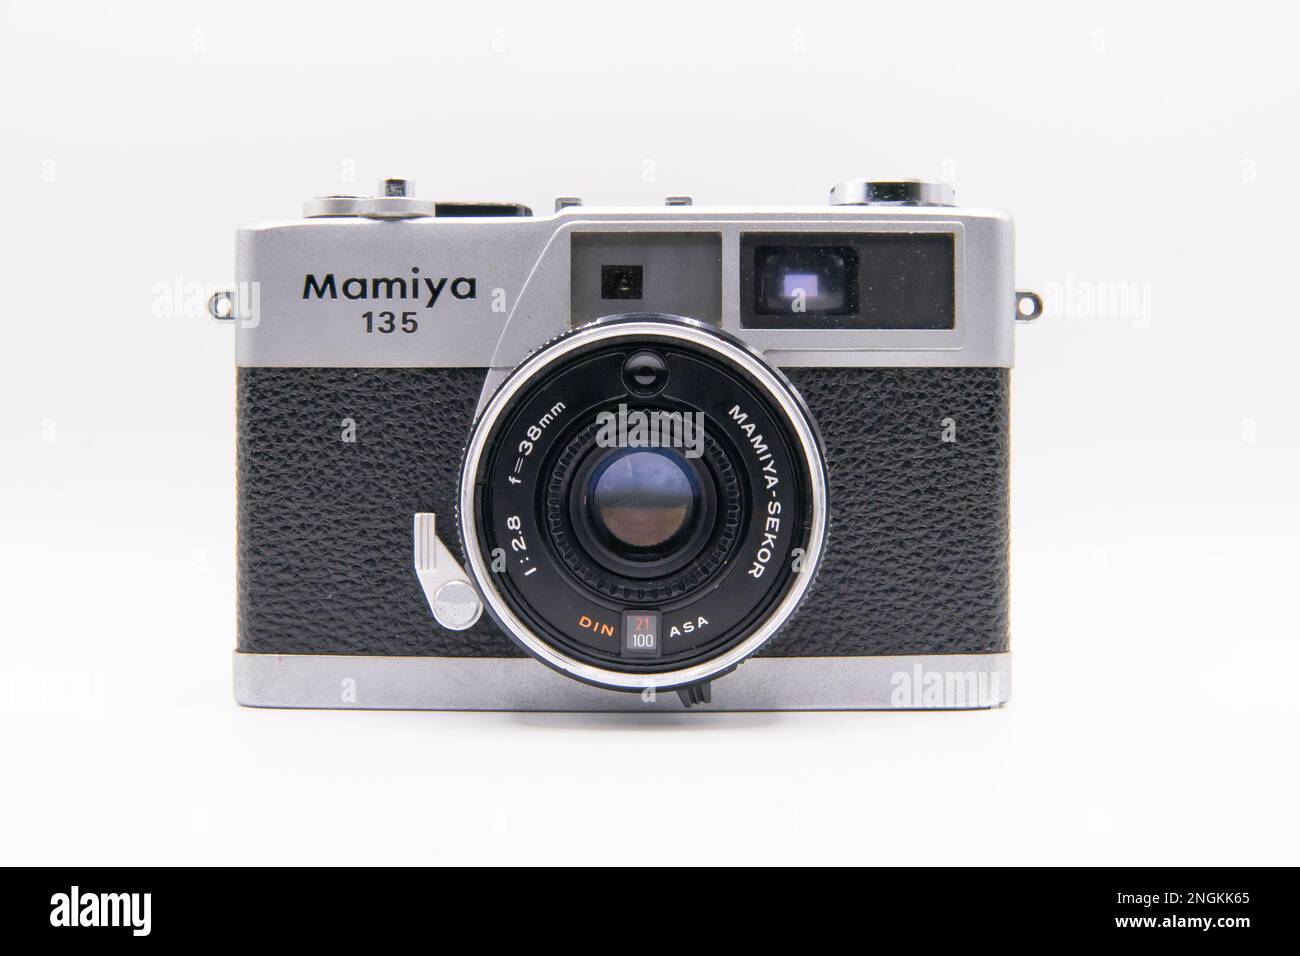 Closeup face on shot of Mamiya 135 EE rangefinder camera with Mamiya Sekkor 38mm lens on white background Stock Photo